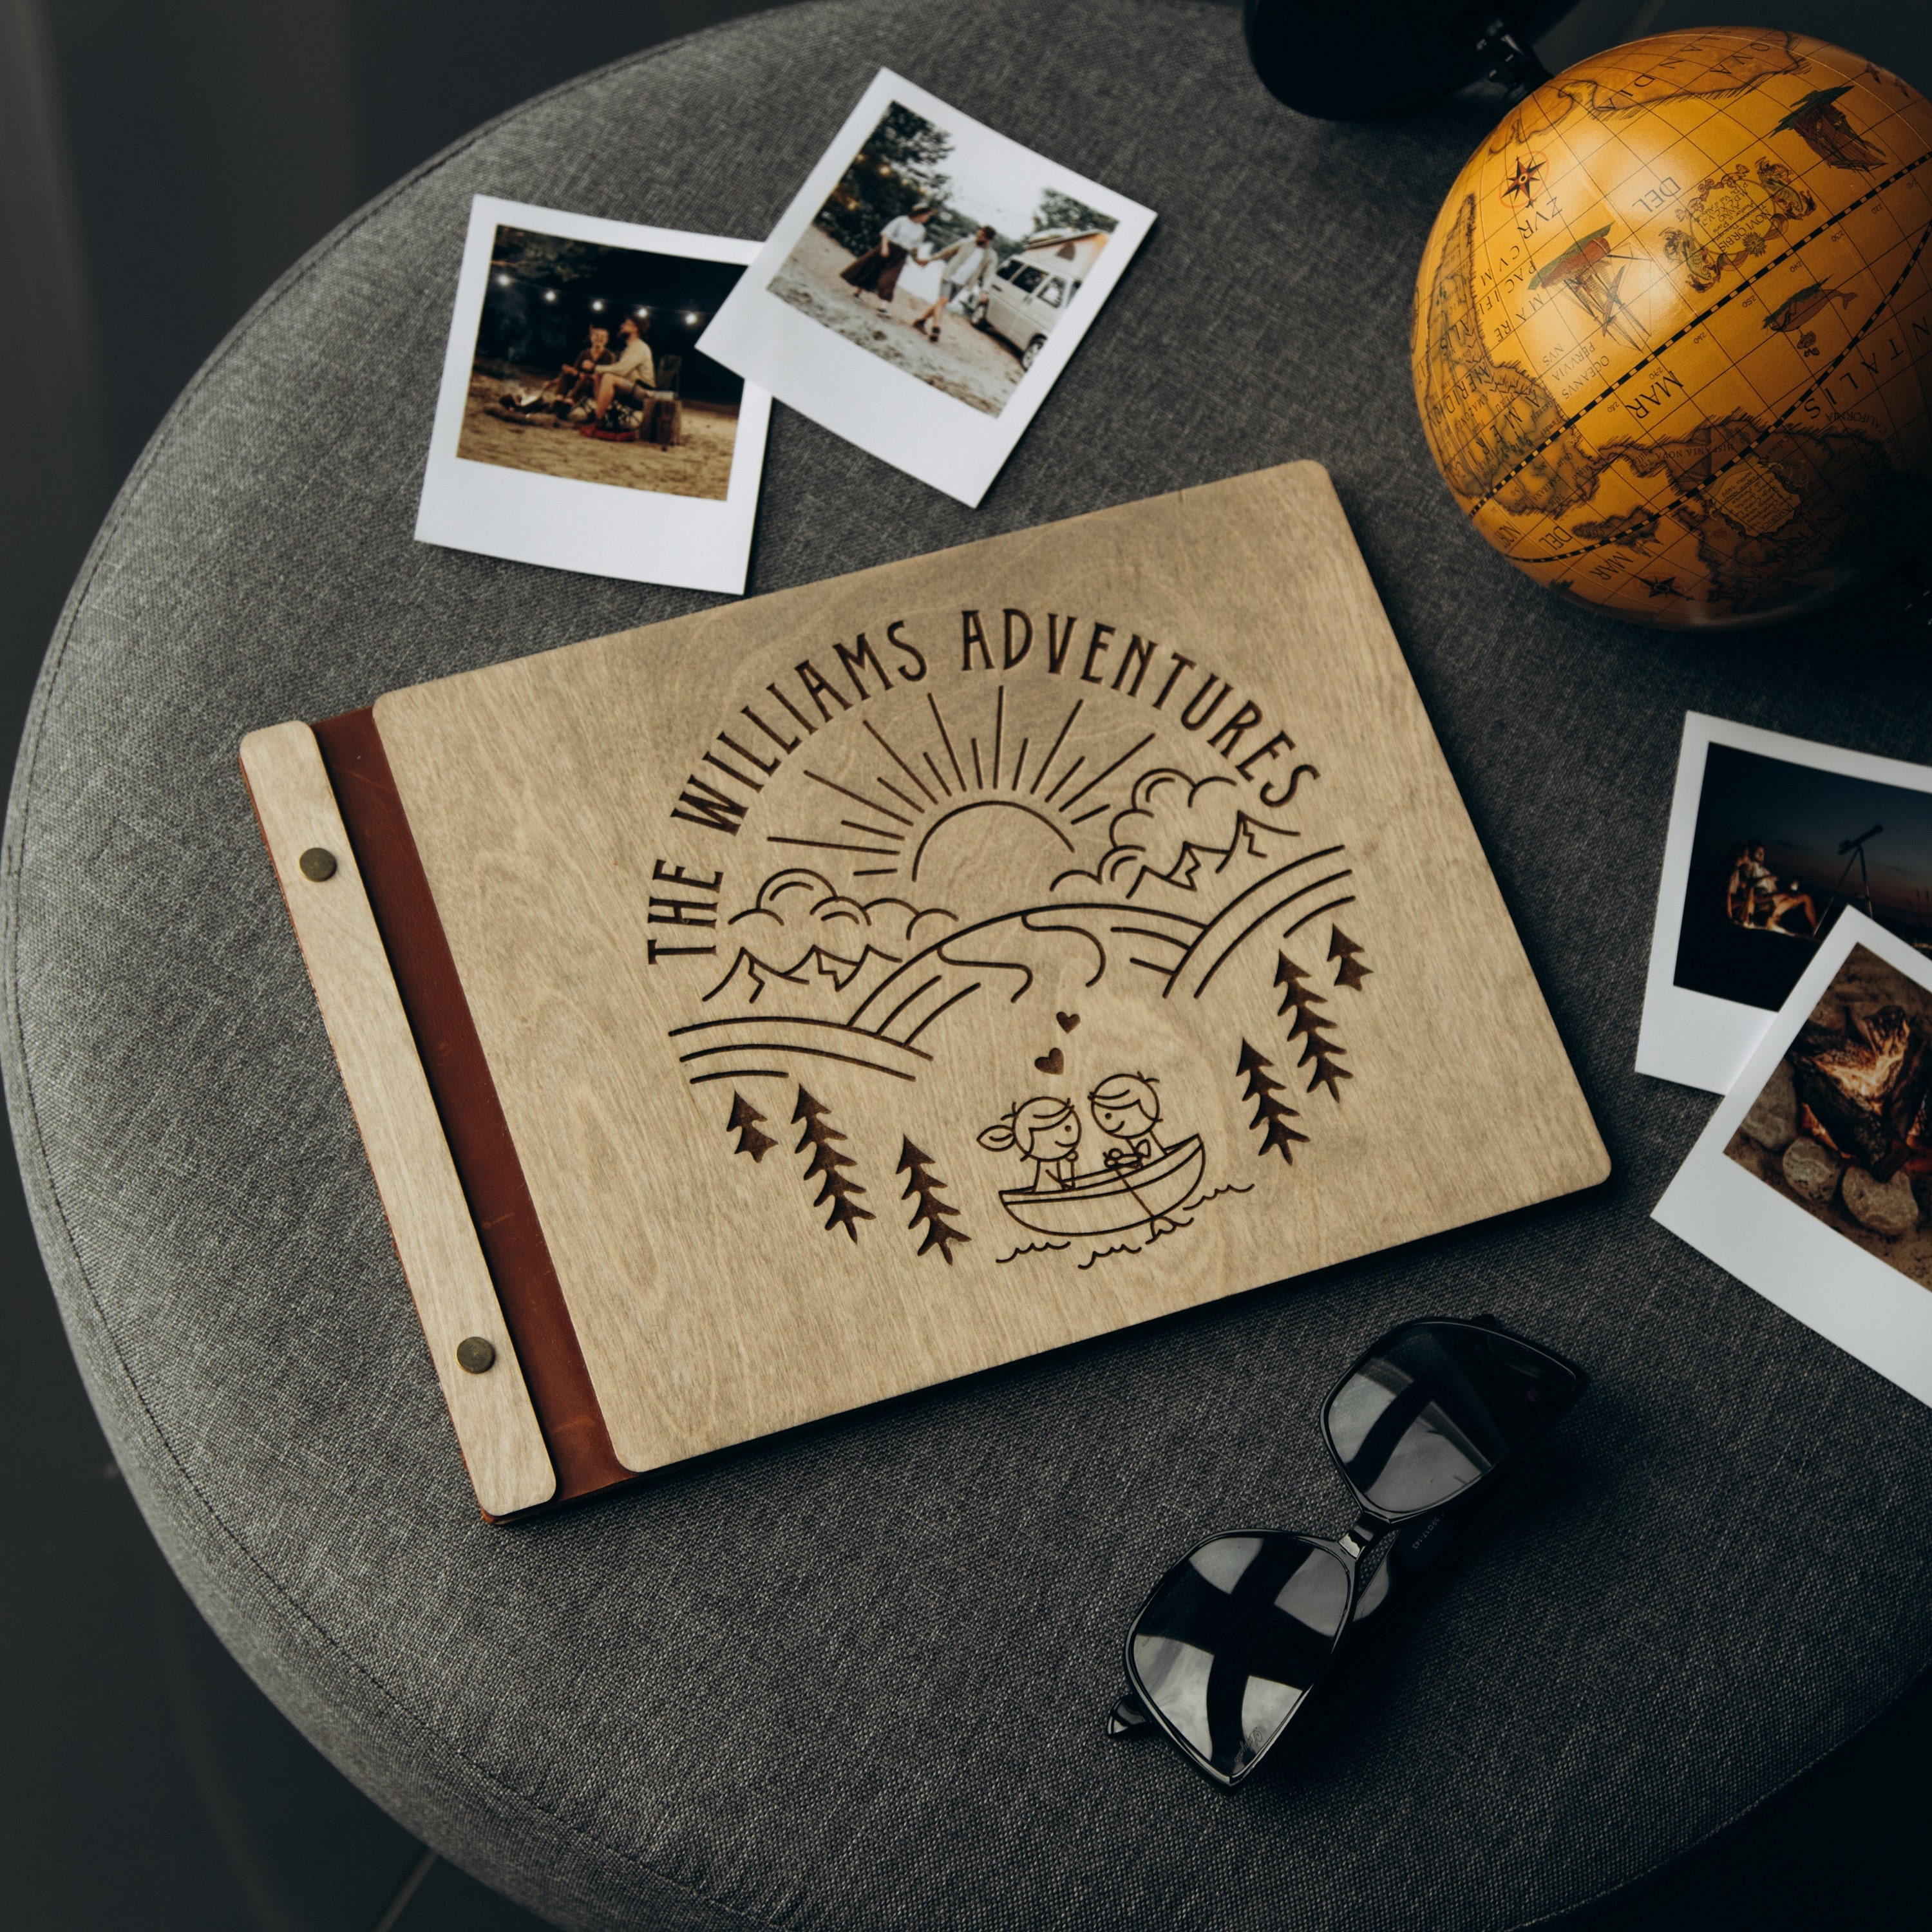 The Adventure Scrapbook, Mountains Scrapbook, Couple Gift, Travel